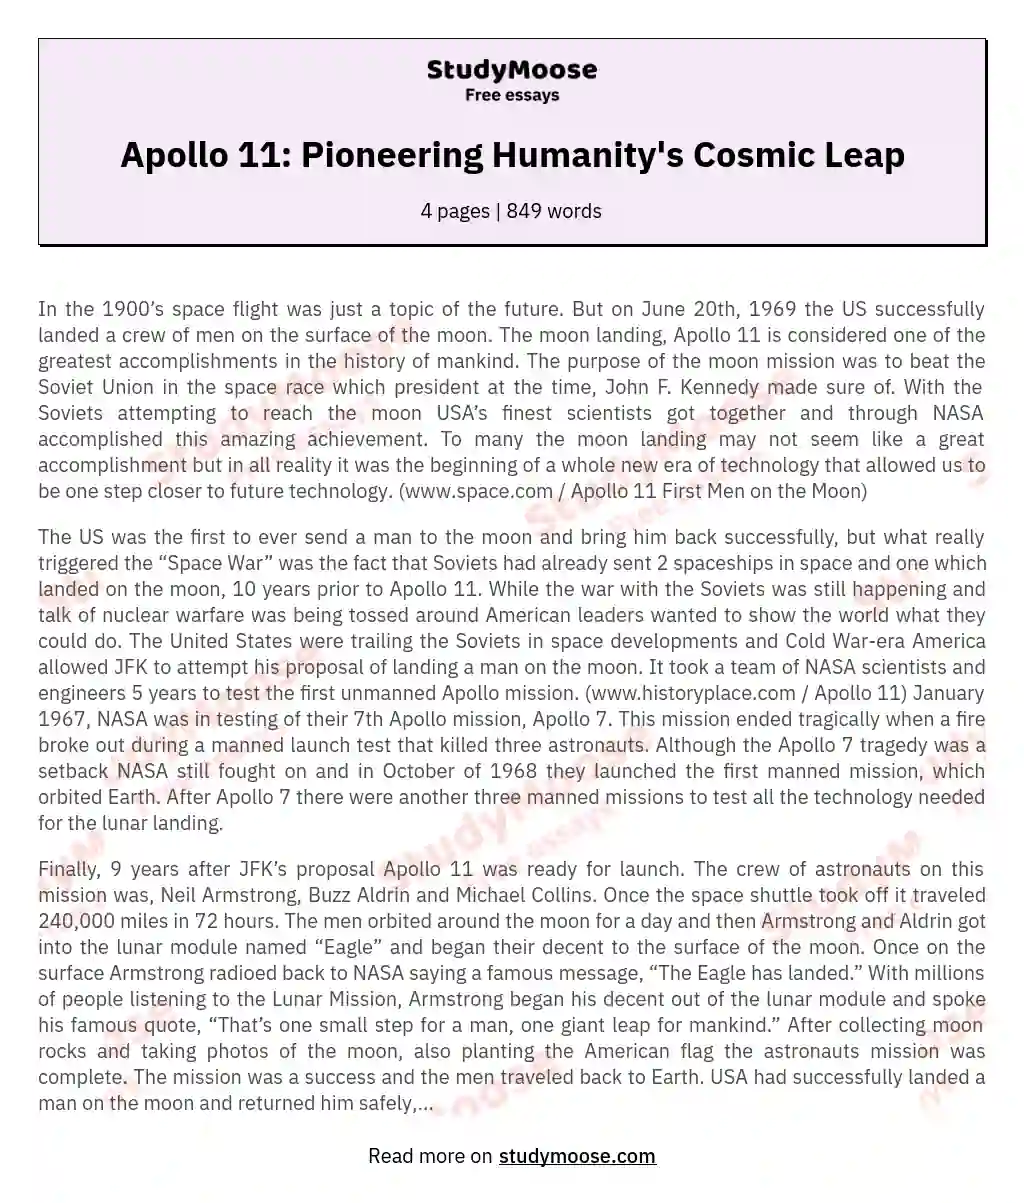 Apollo 11: Pioneering Humanity's Cosmic Leap essay